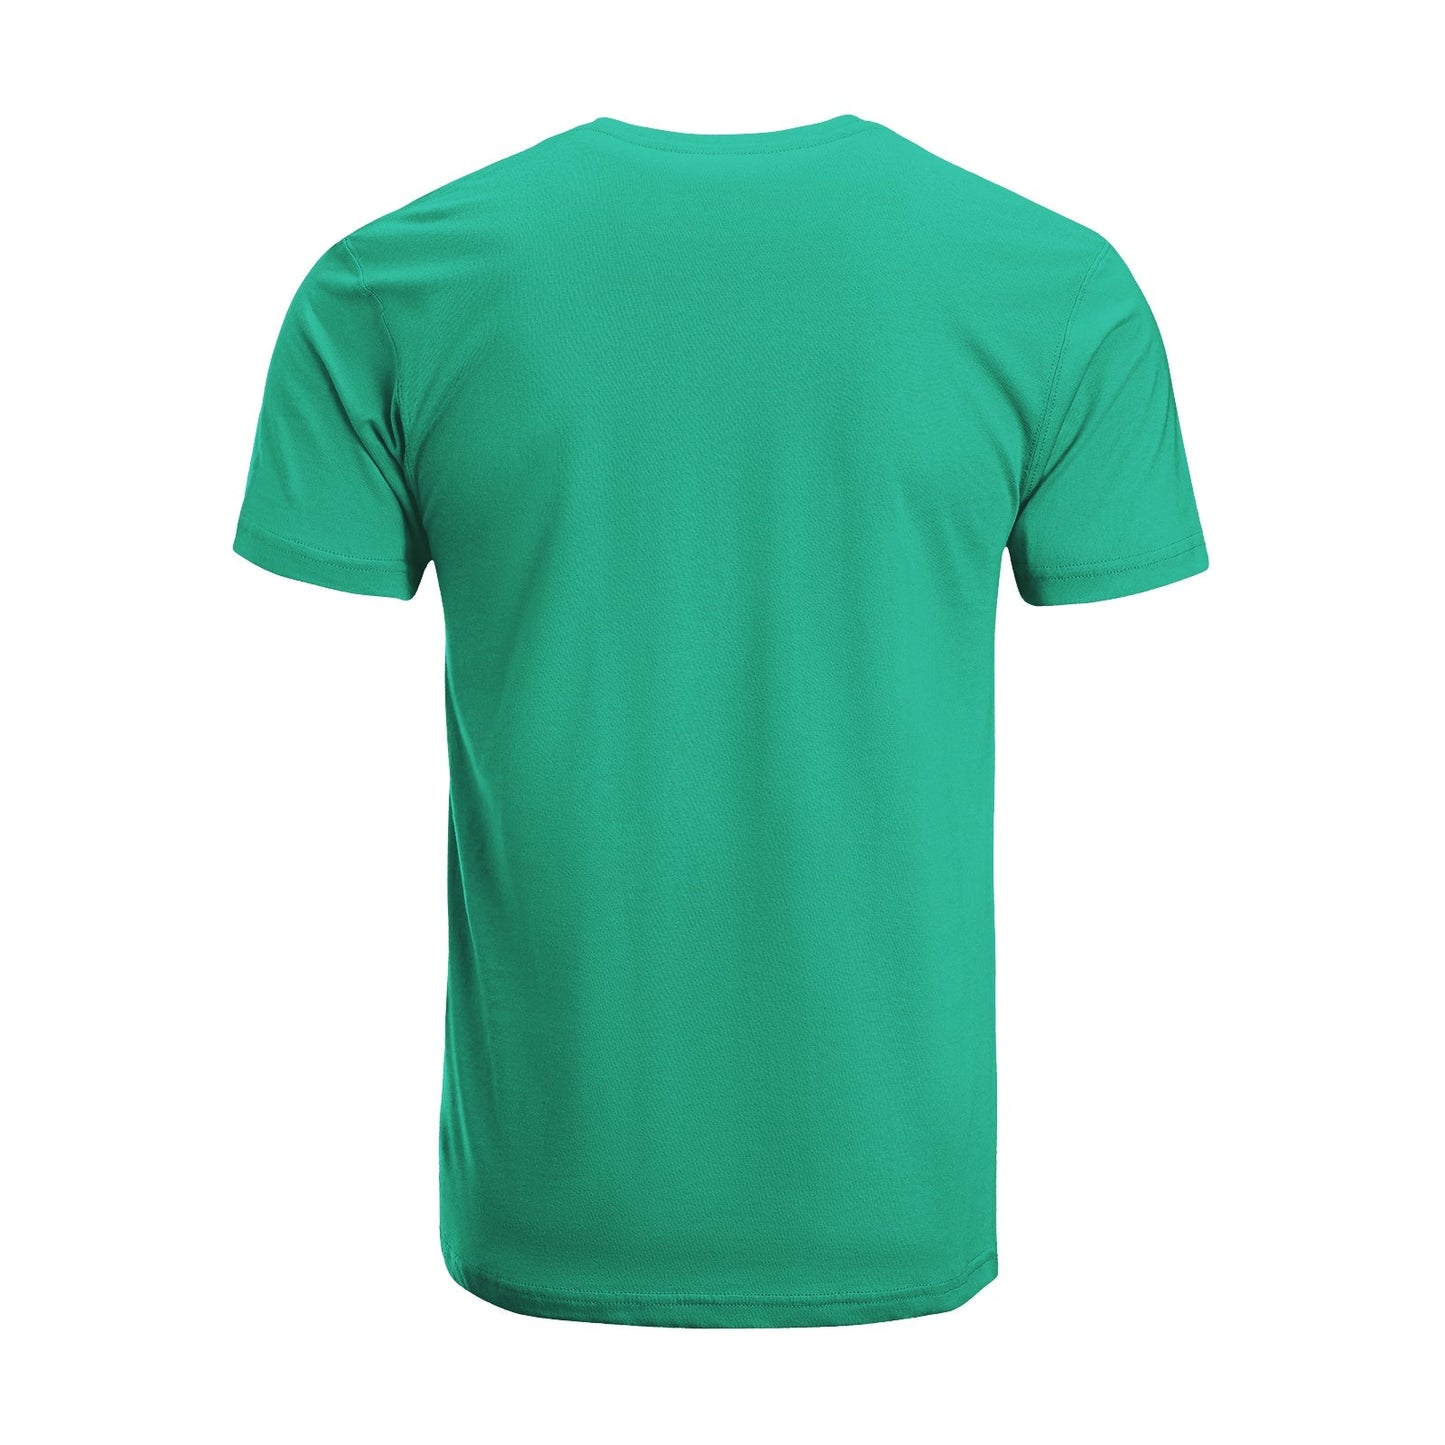 Unisex Short Sleeve Crew Neck Cotton Jersey T-Shirt MOM 24